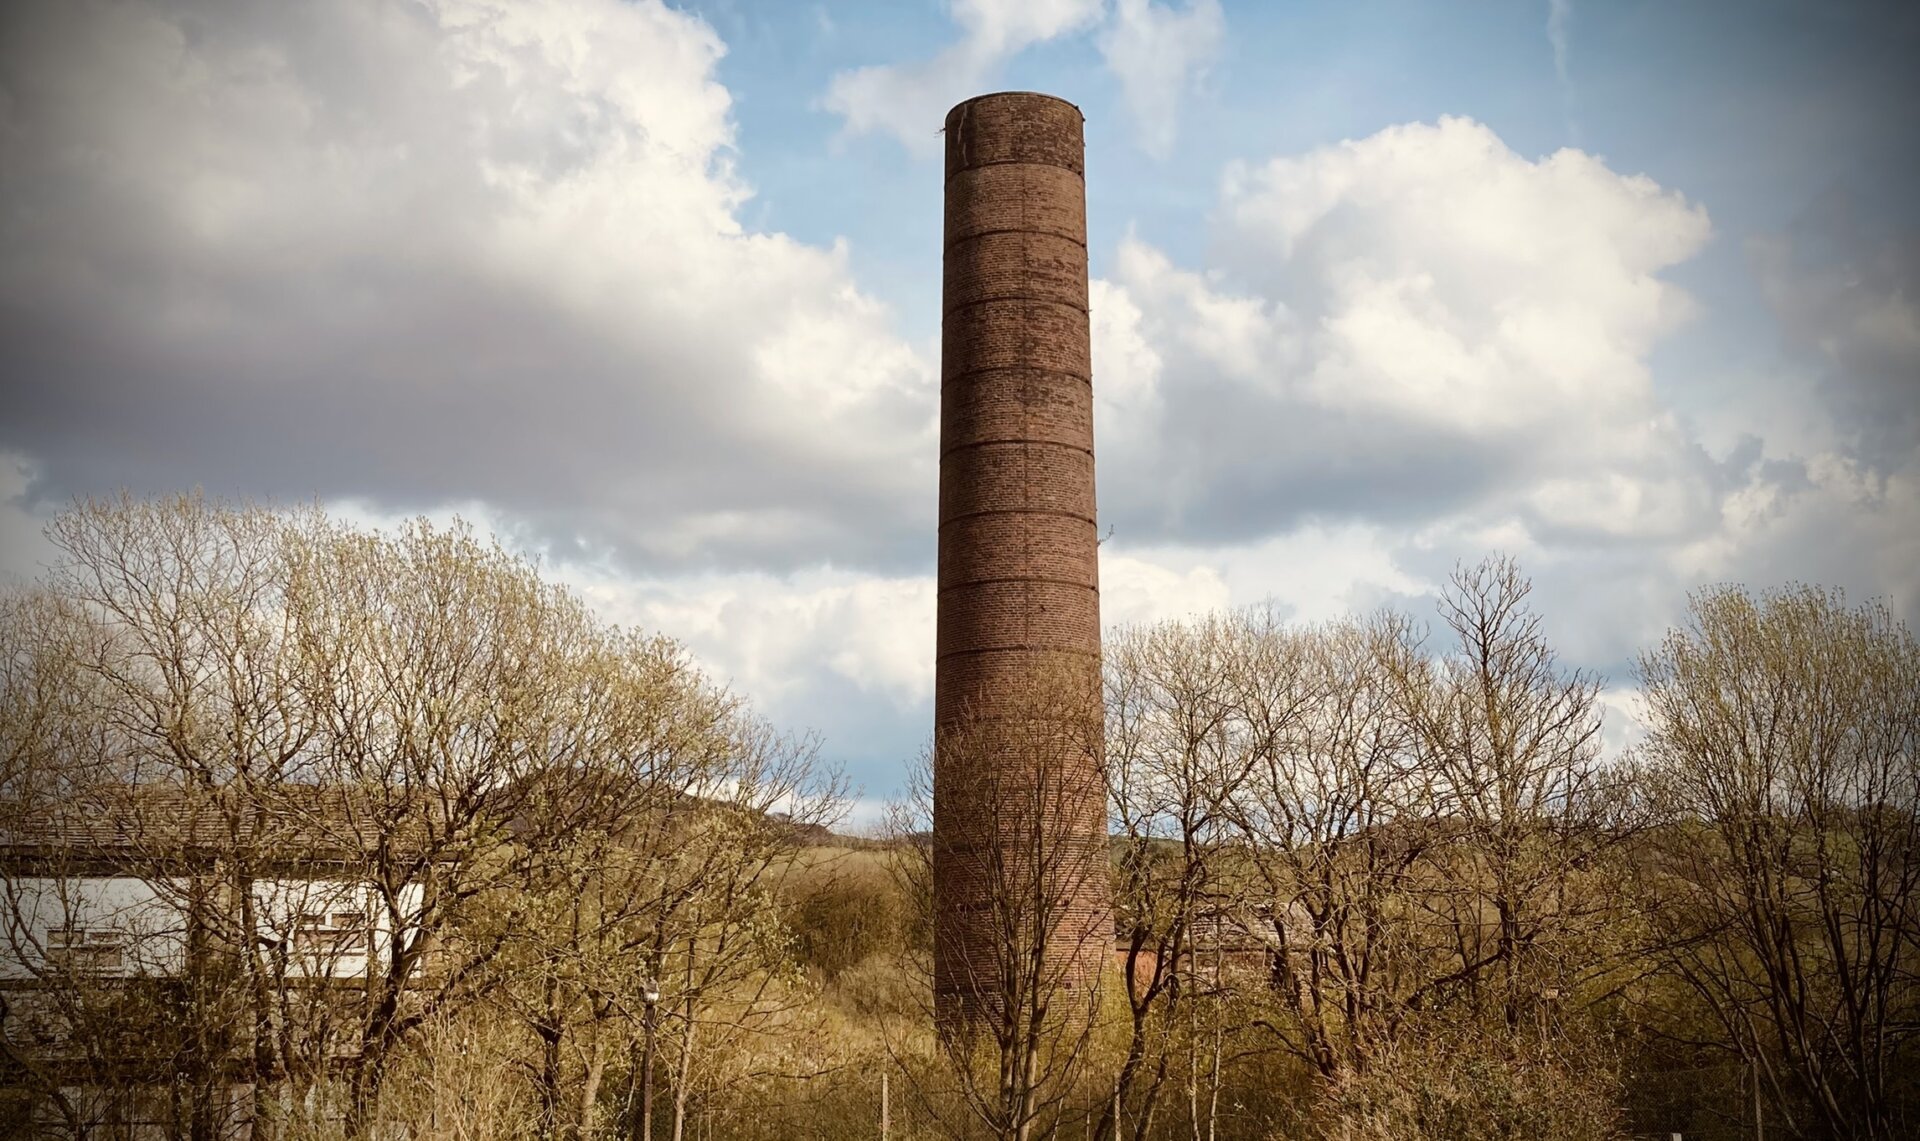 The chimney near Nuttal Park